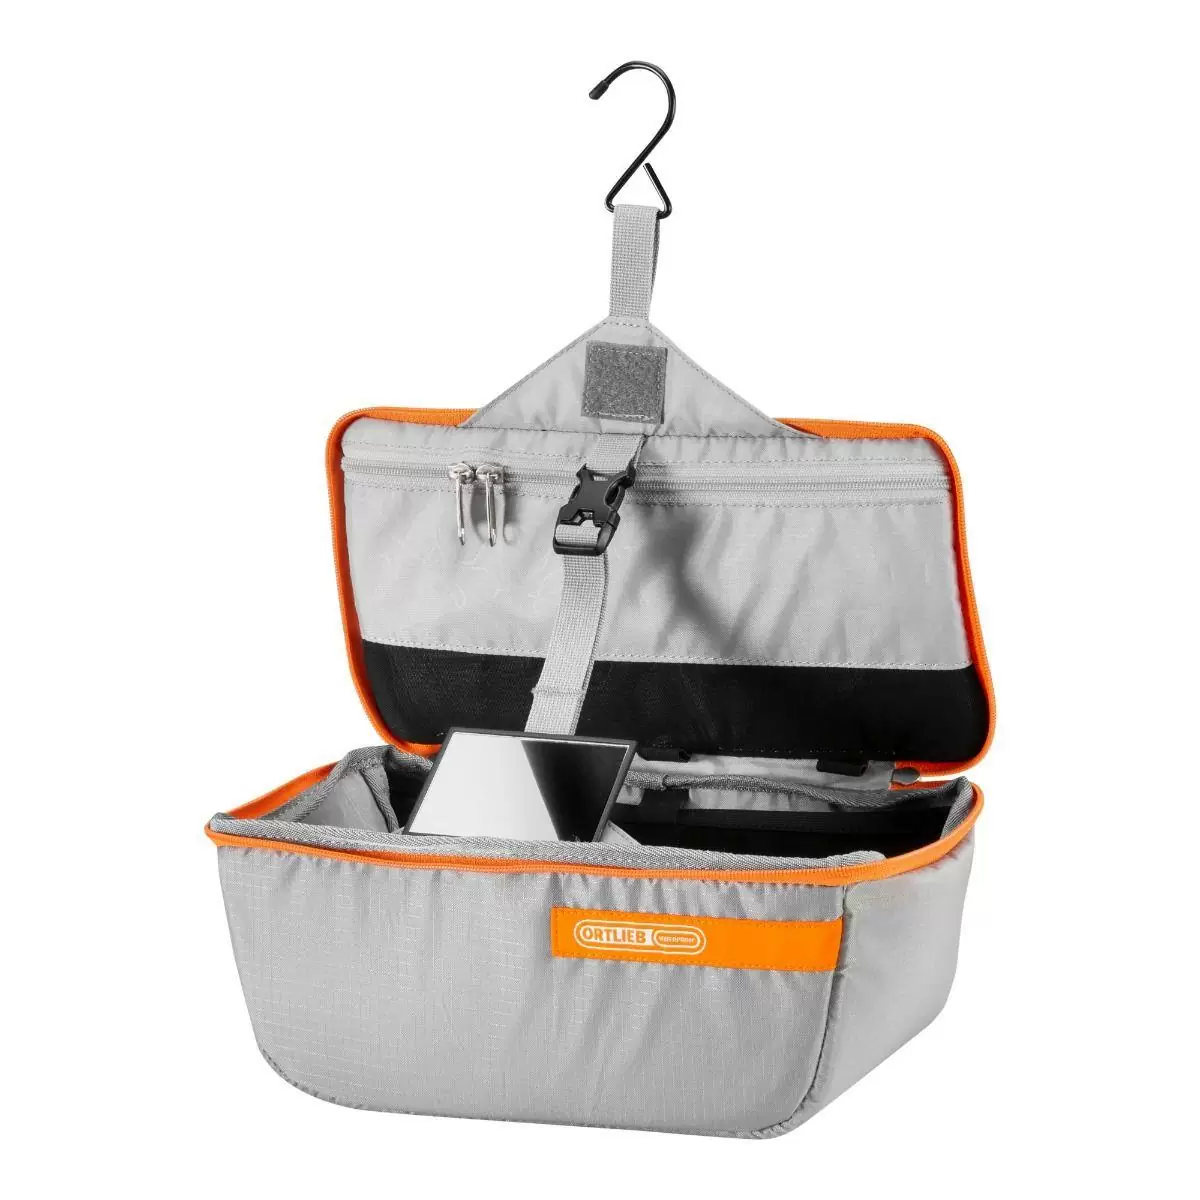 Universal Organizer Beauty Case Toiletry Bag 5L - image